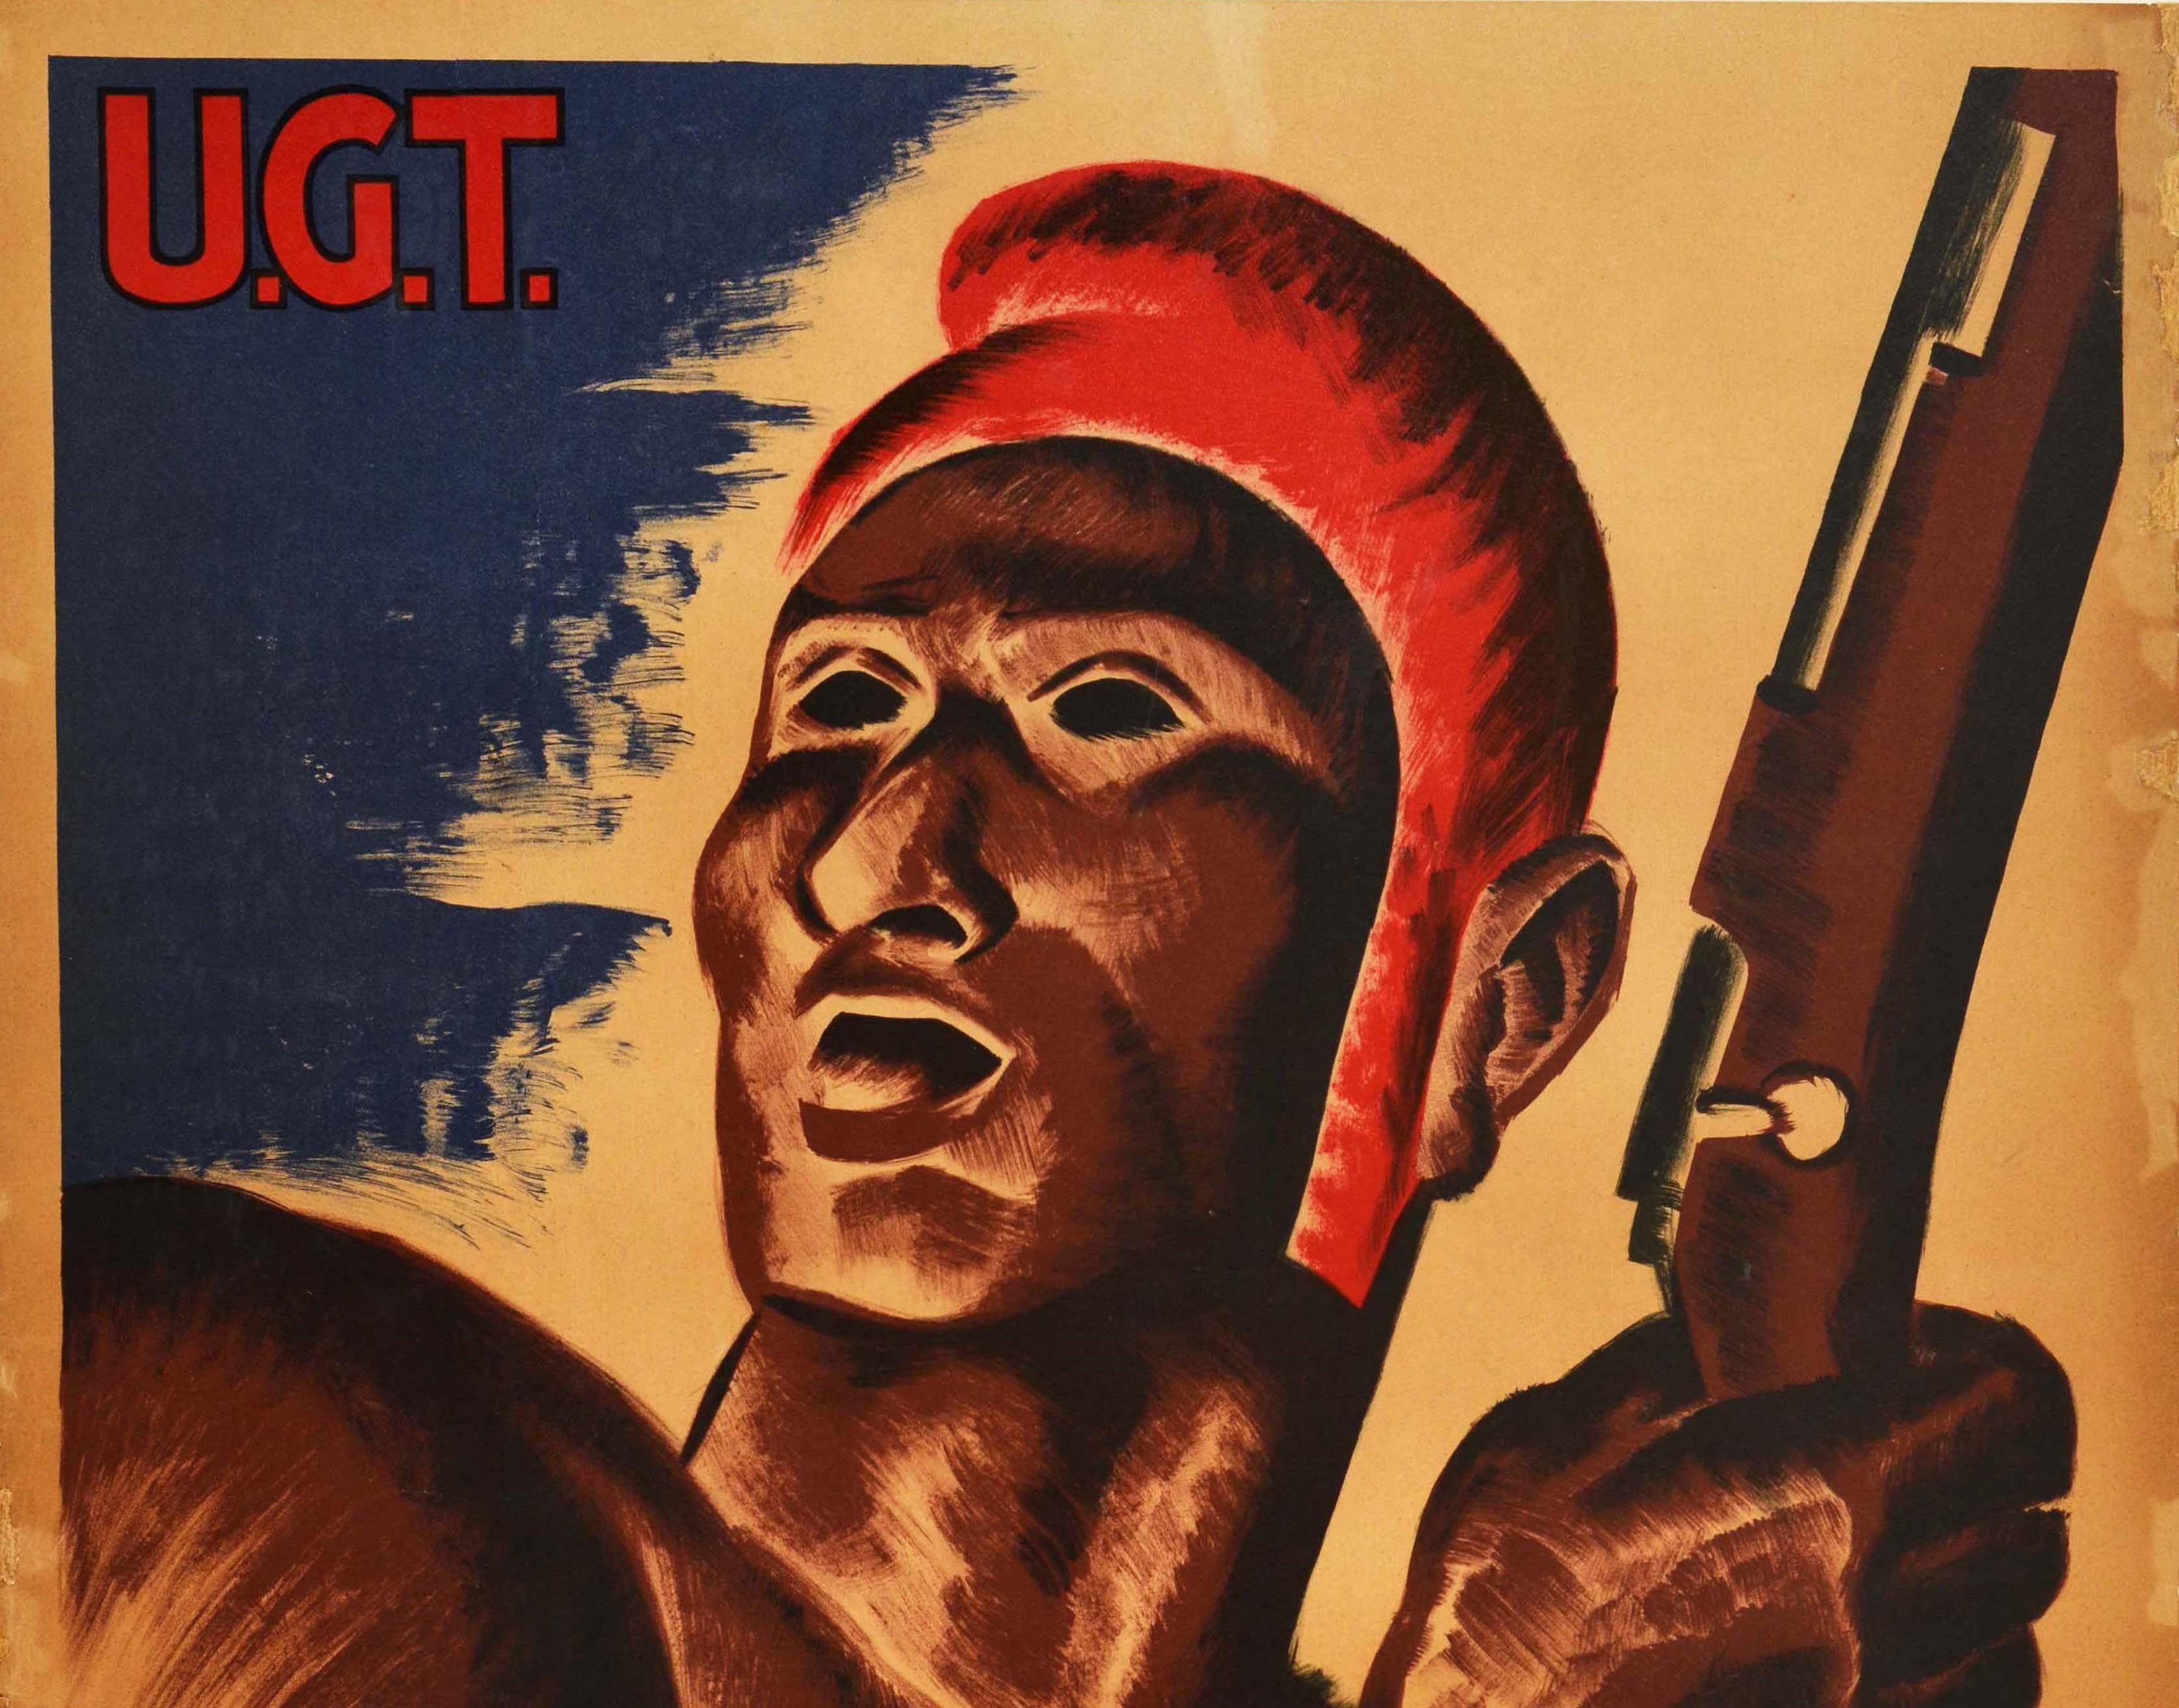 Original Vintage Spanish Civil War Poster Treballadors! Workers Against Fascism - Print by Unknown